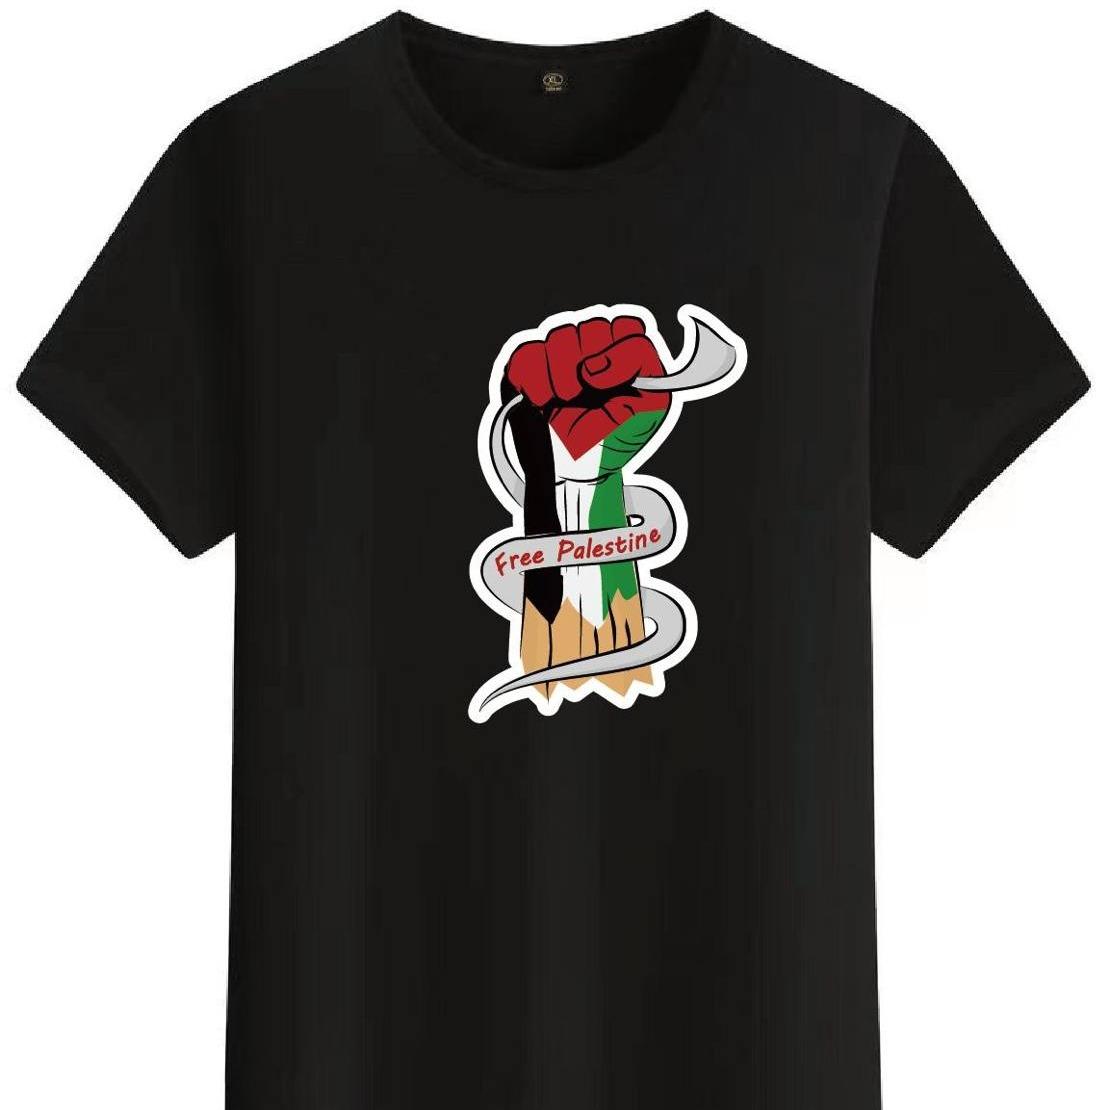 High-Quality "Free Palestine" Fist Design Shirt: 100% Cotton